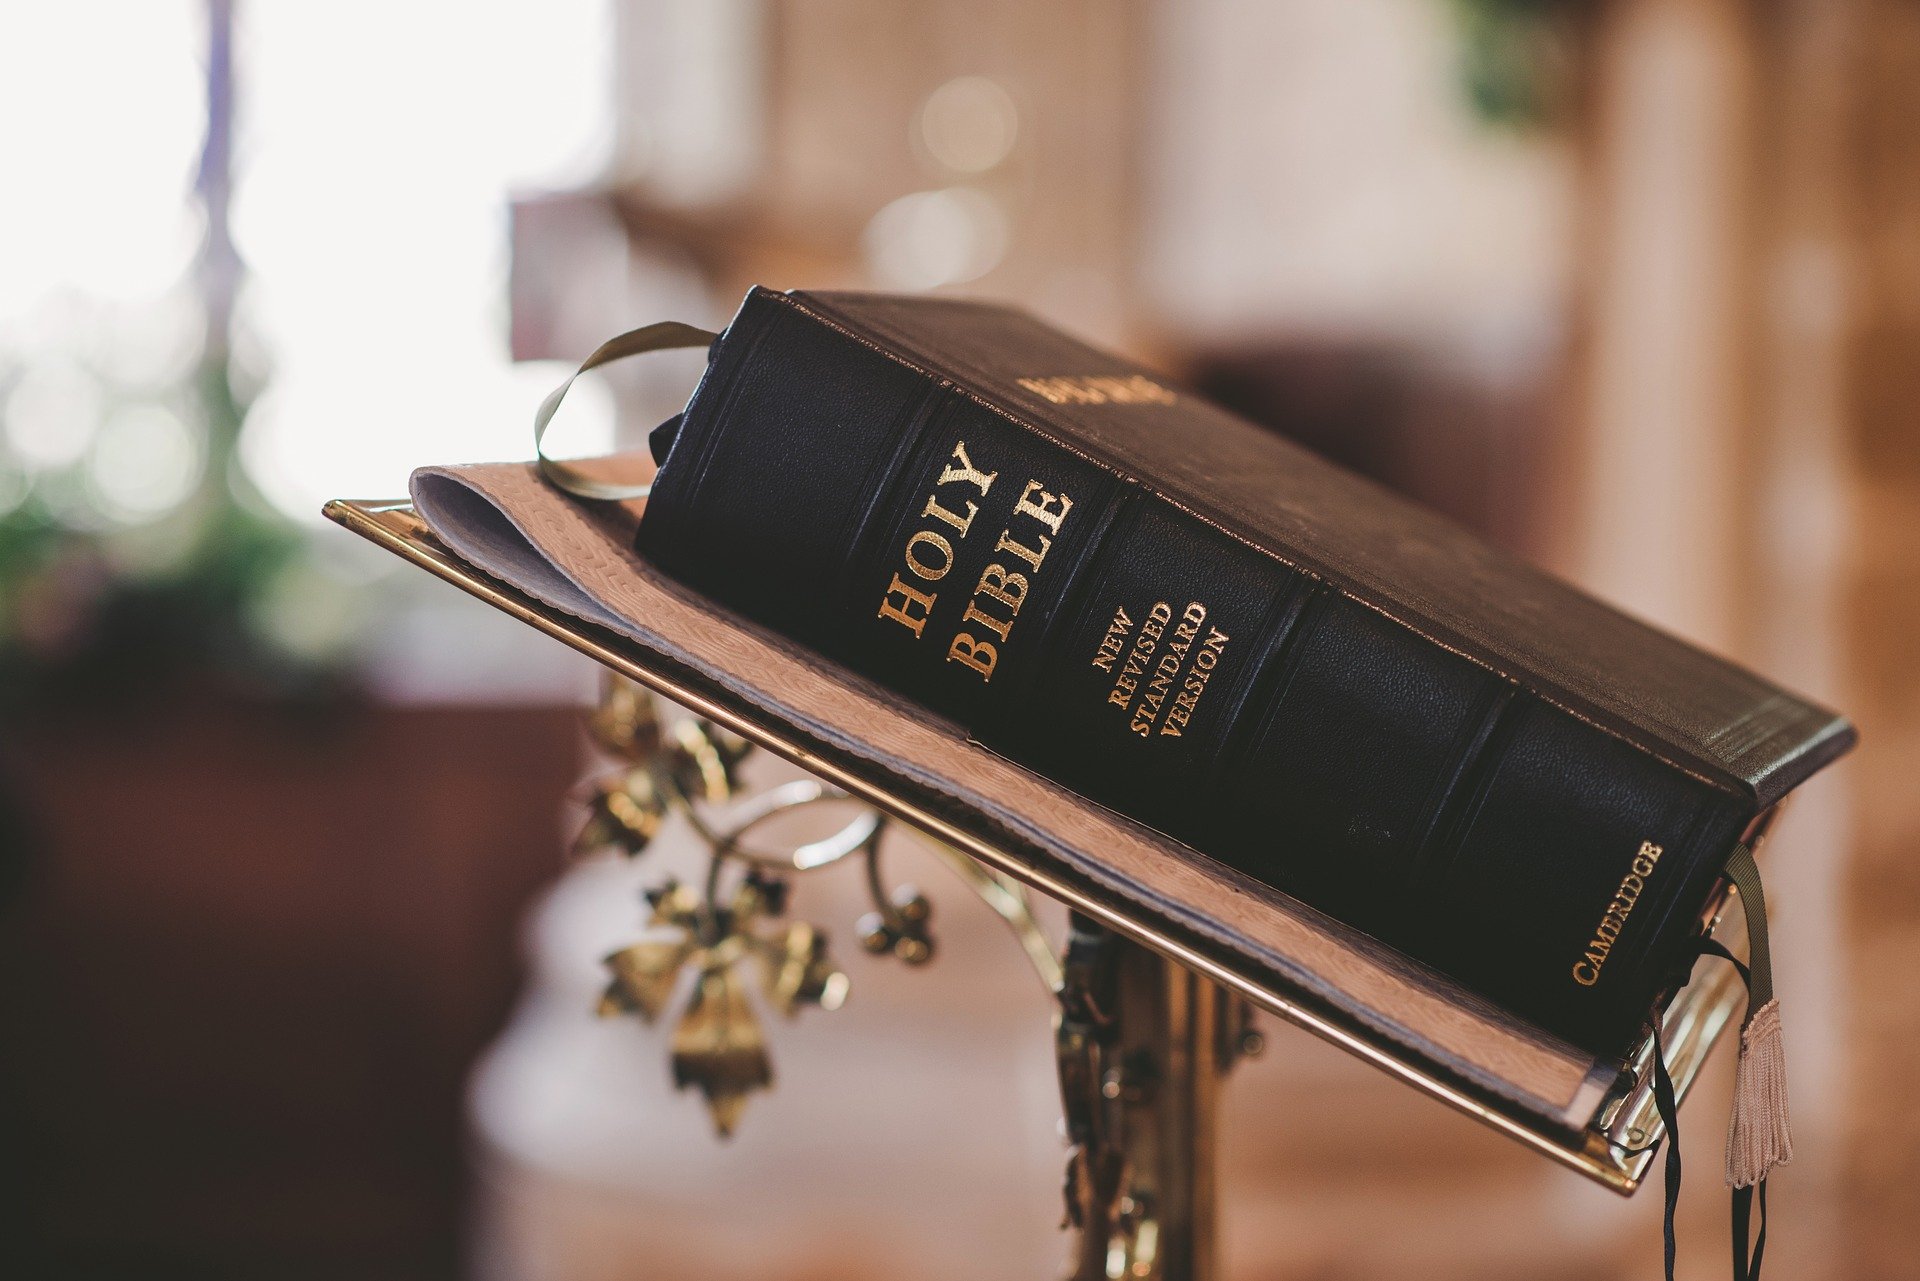 US: Utah Bans Bible From Schools Over ‘Vulgar Or Violent’ Passages